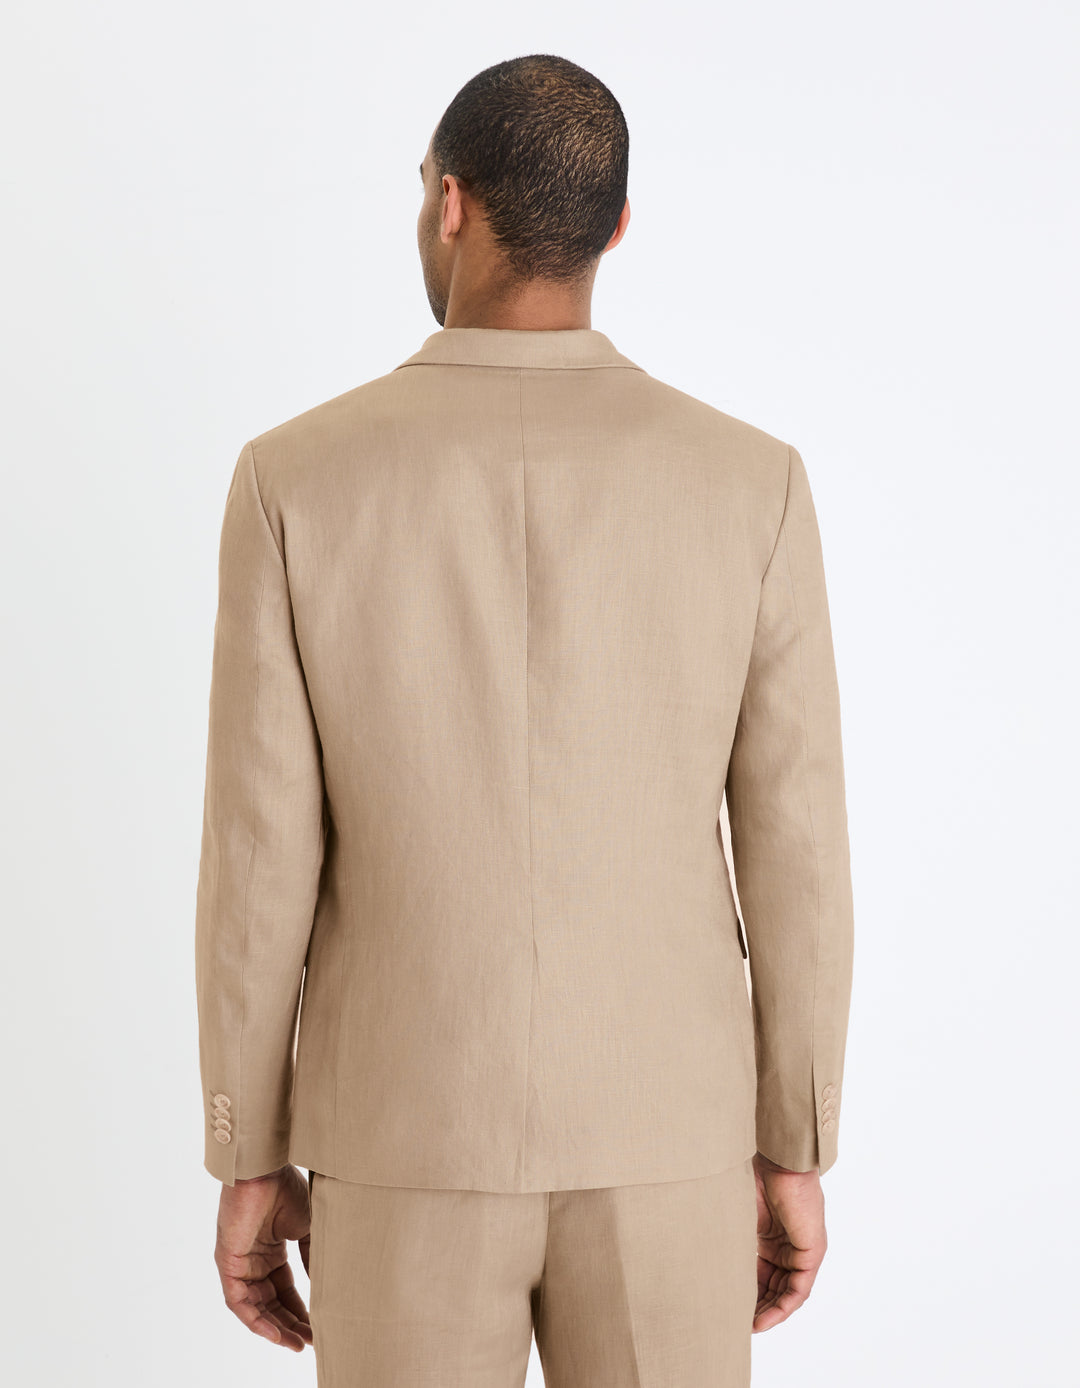 Slim linen suit jacket